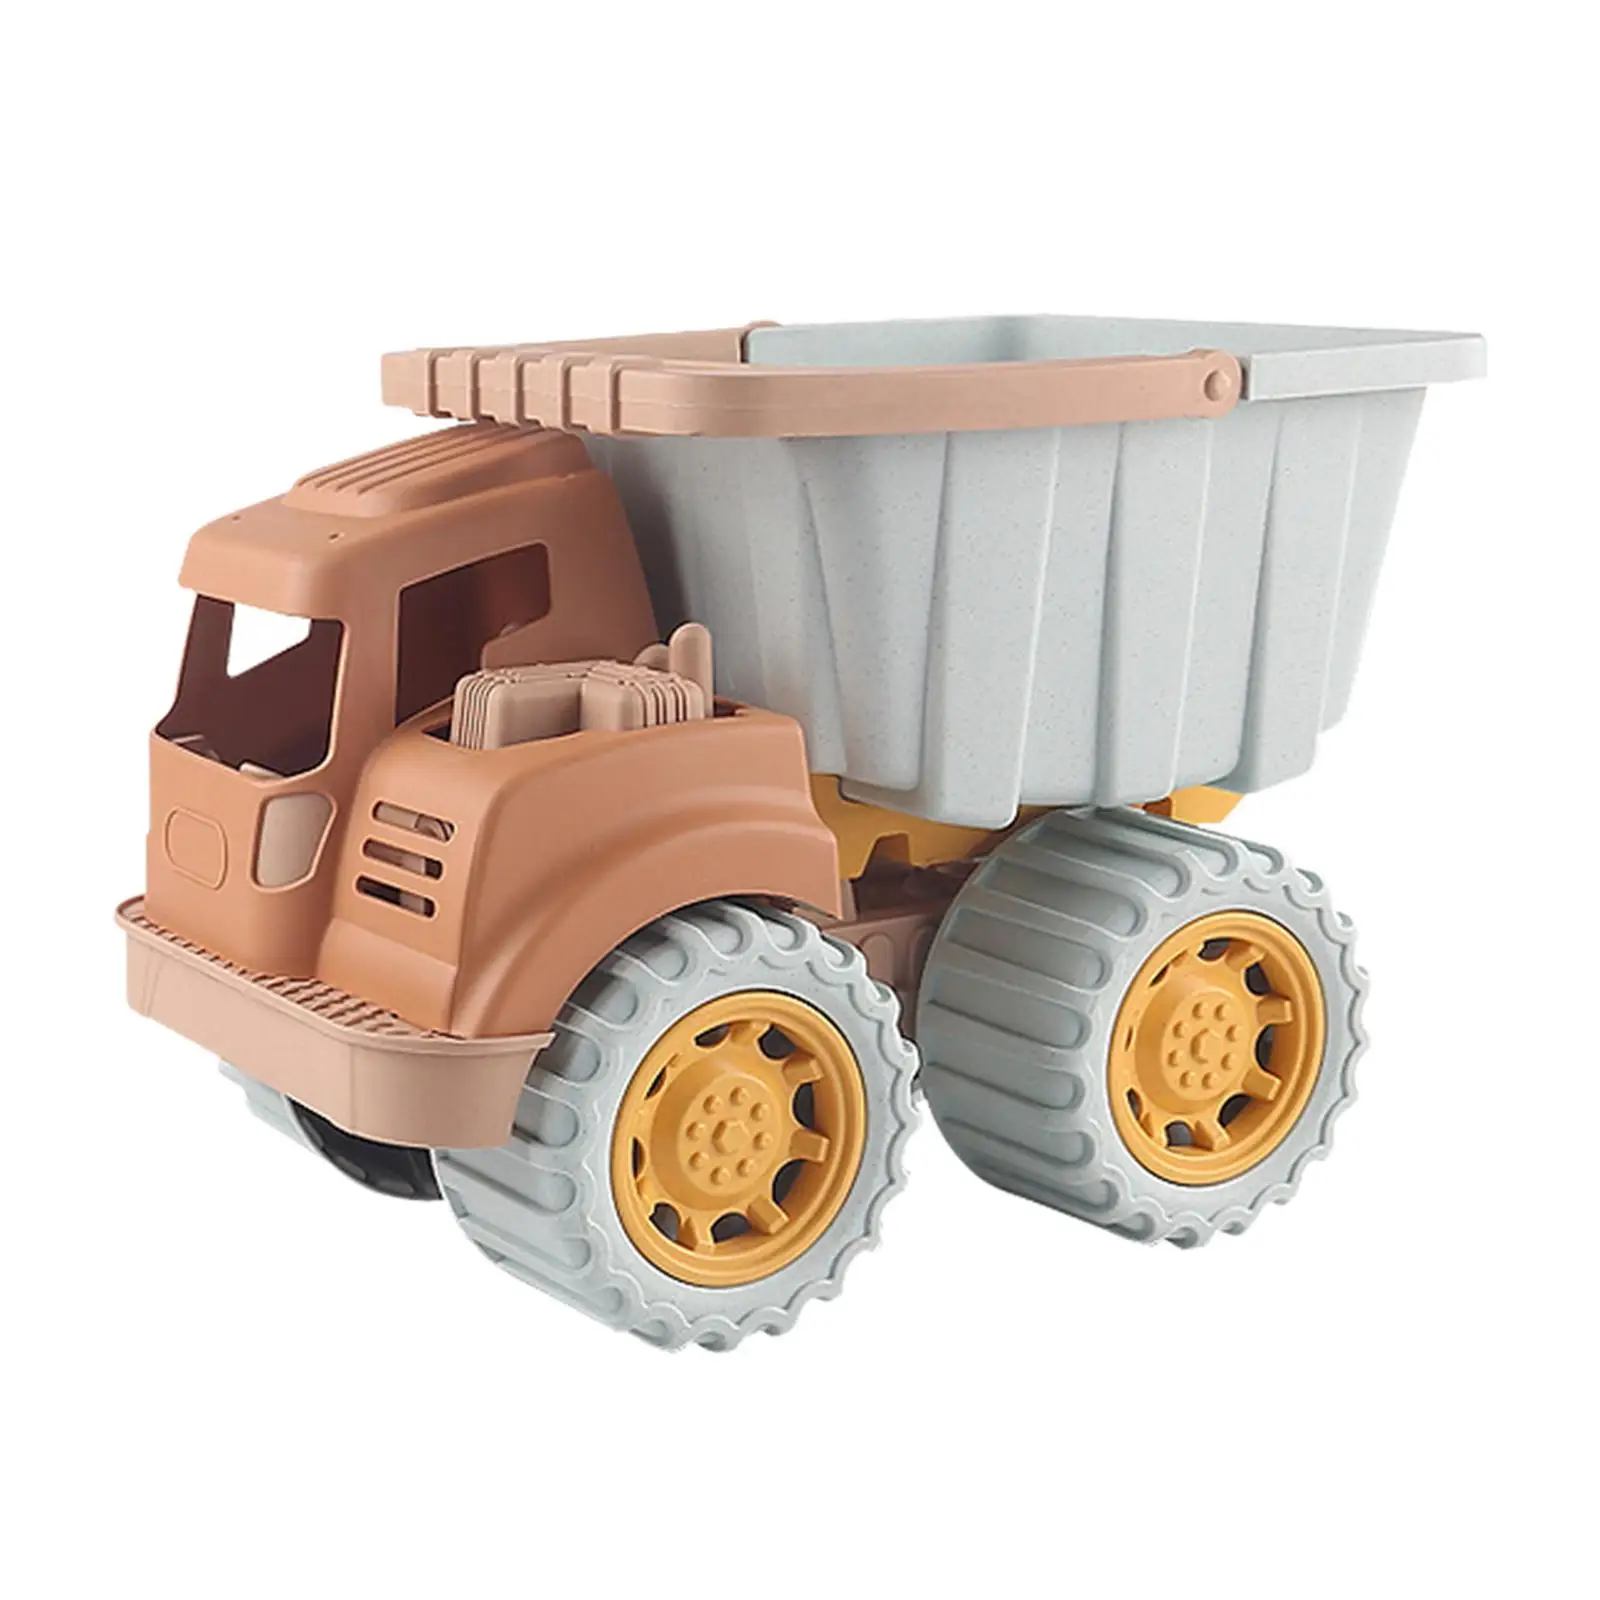 Dump Truck Toy Mini Construction Trucks for Party Favors Sand Beach Toy Boys